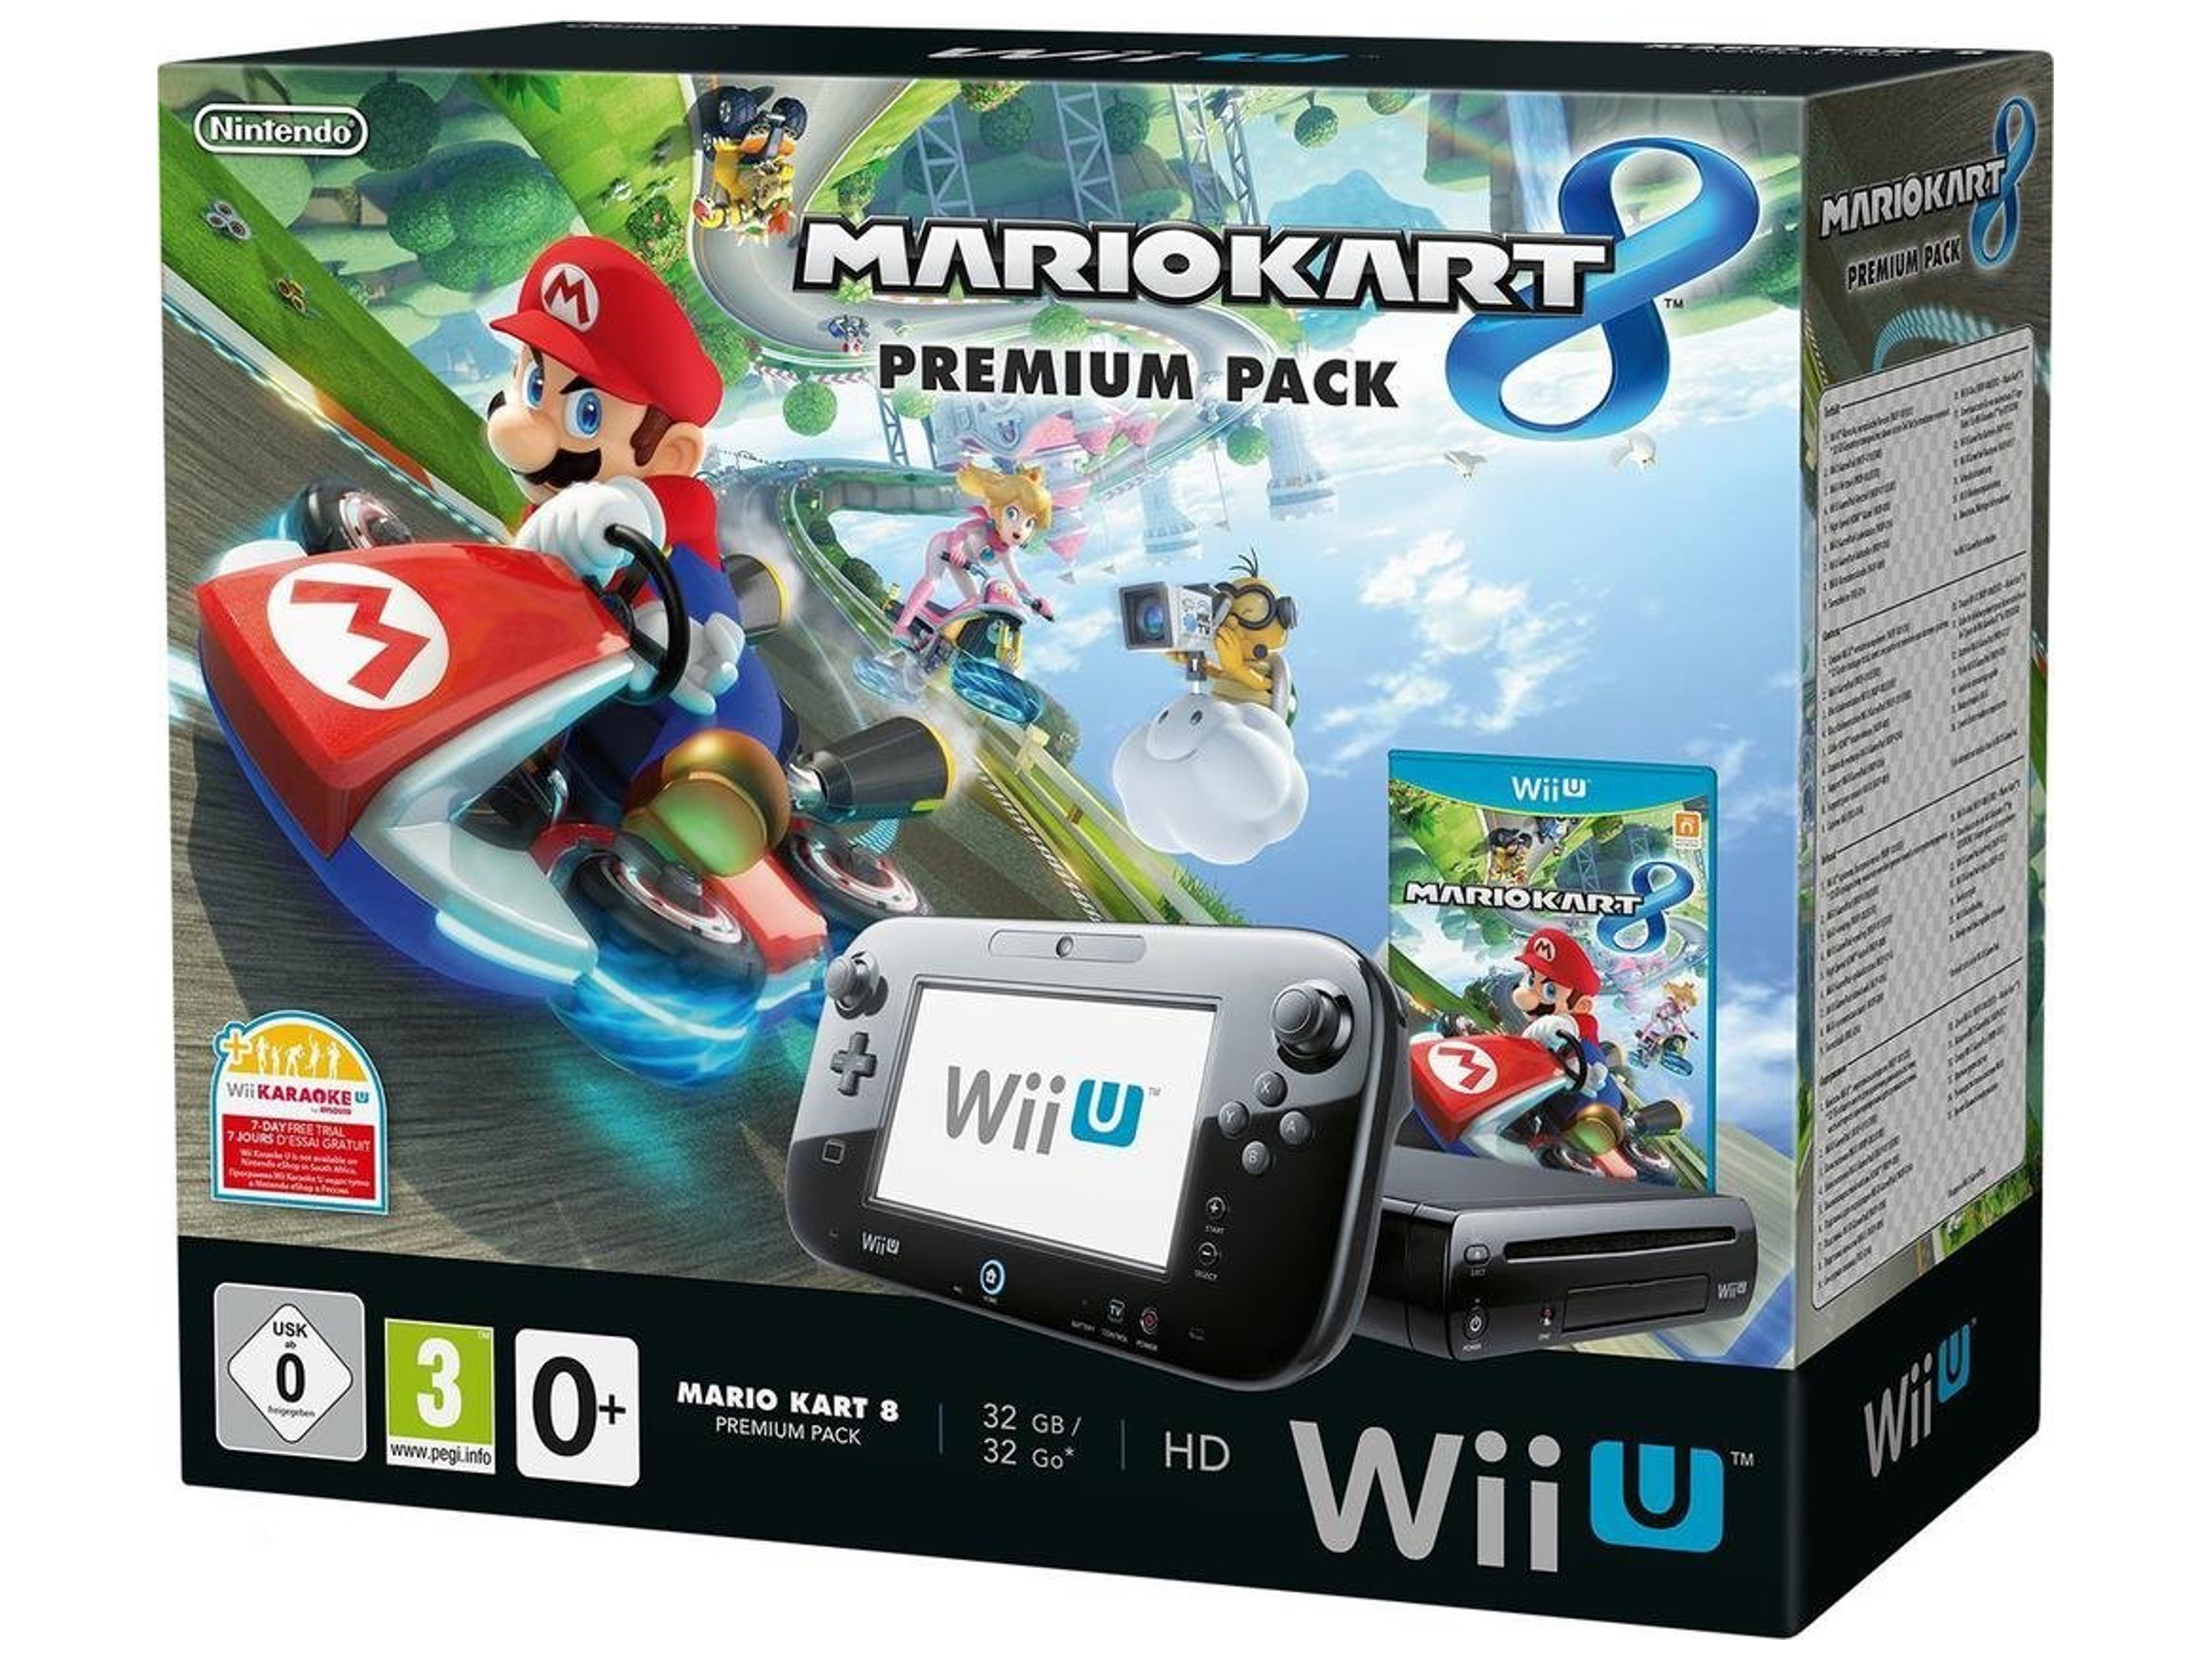 Nintendo Wii U Starter Pack - Mario Kart 8 Edition [Complete] - Wii U Hardware